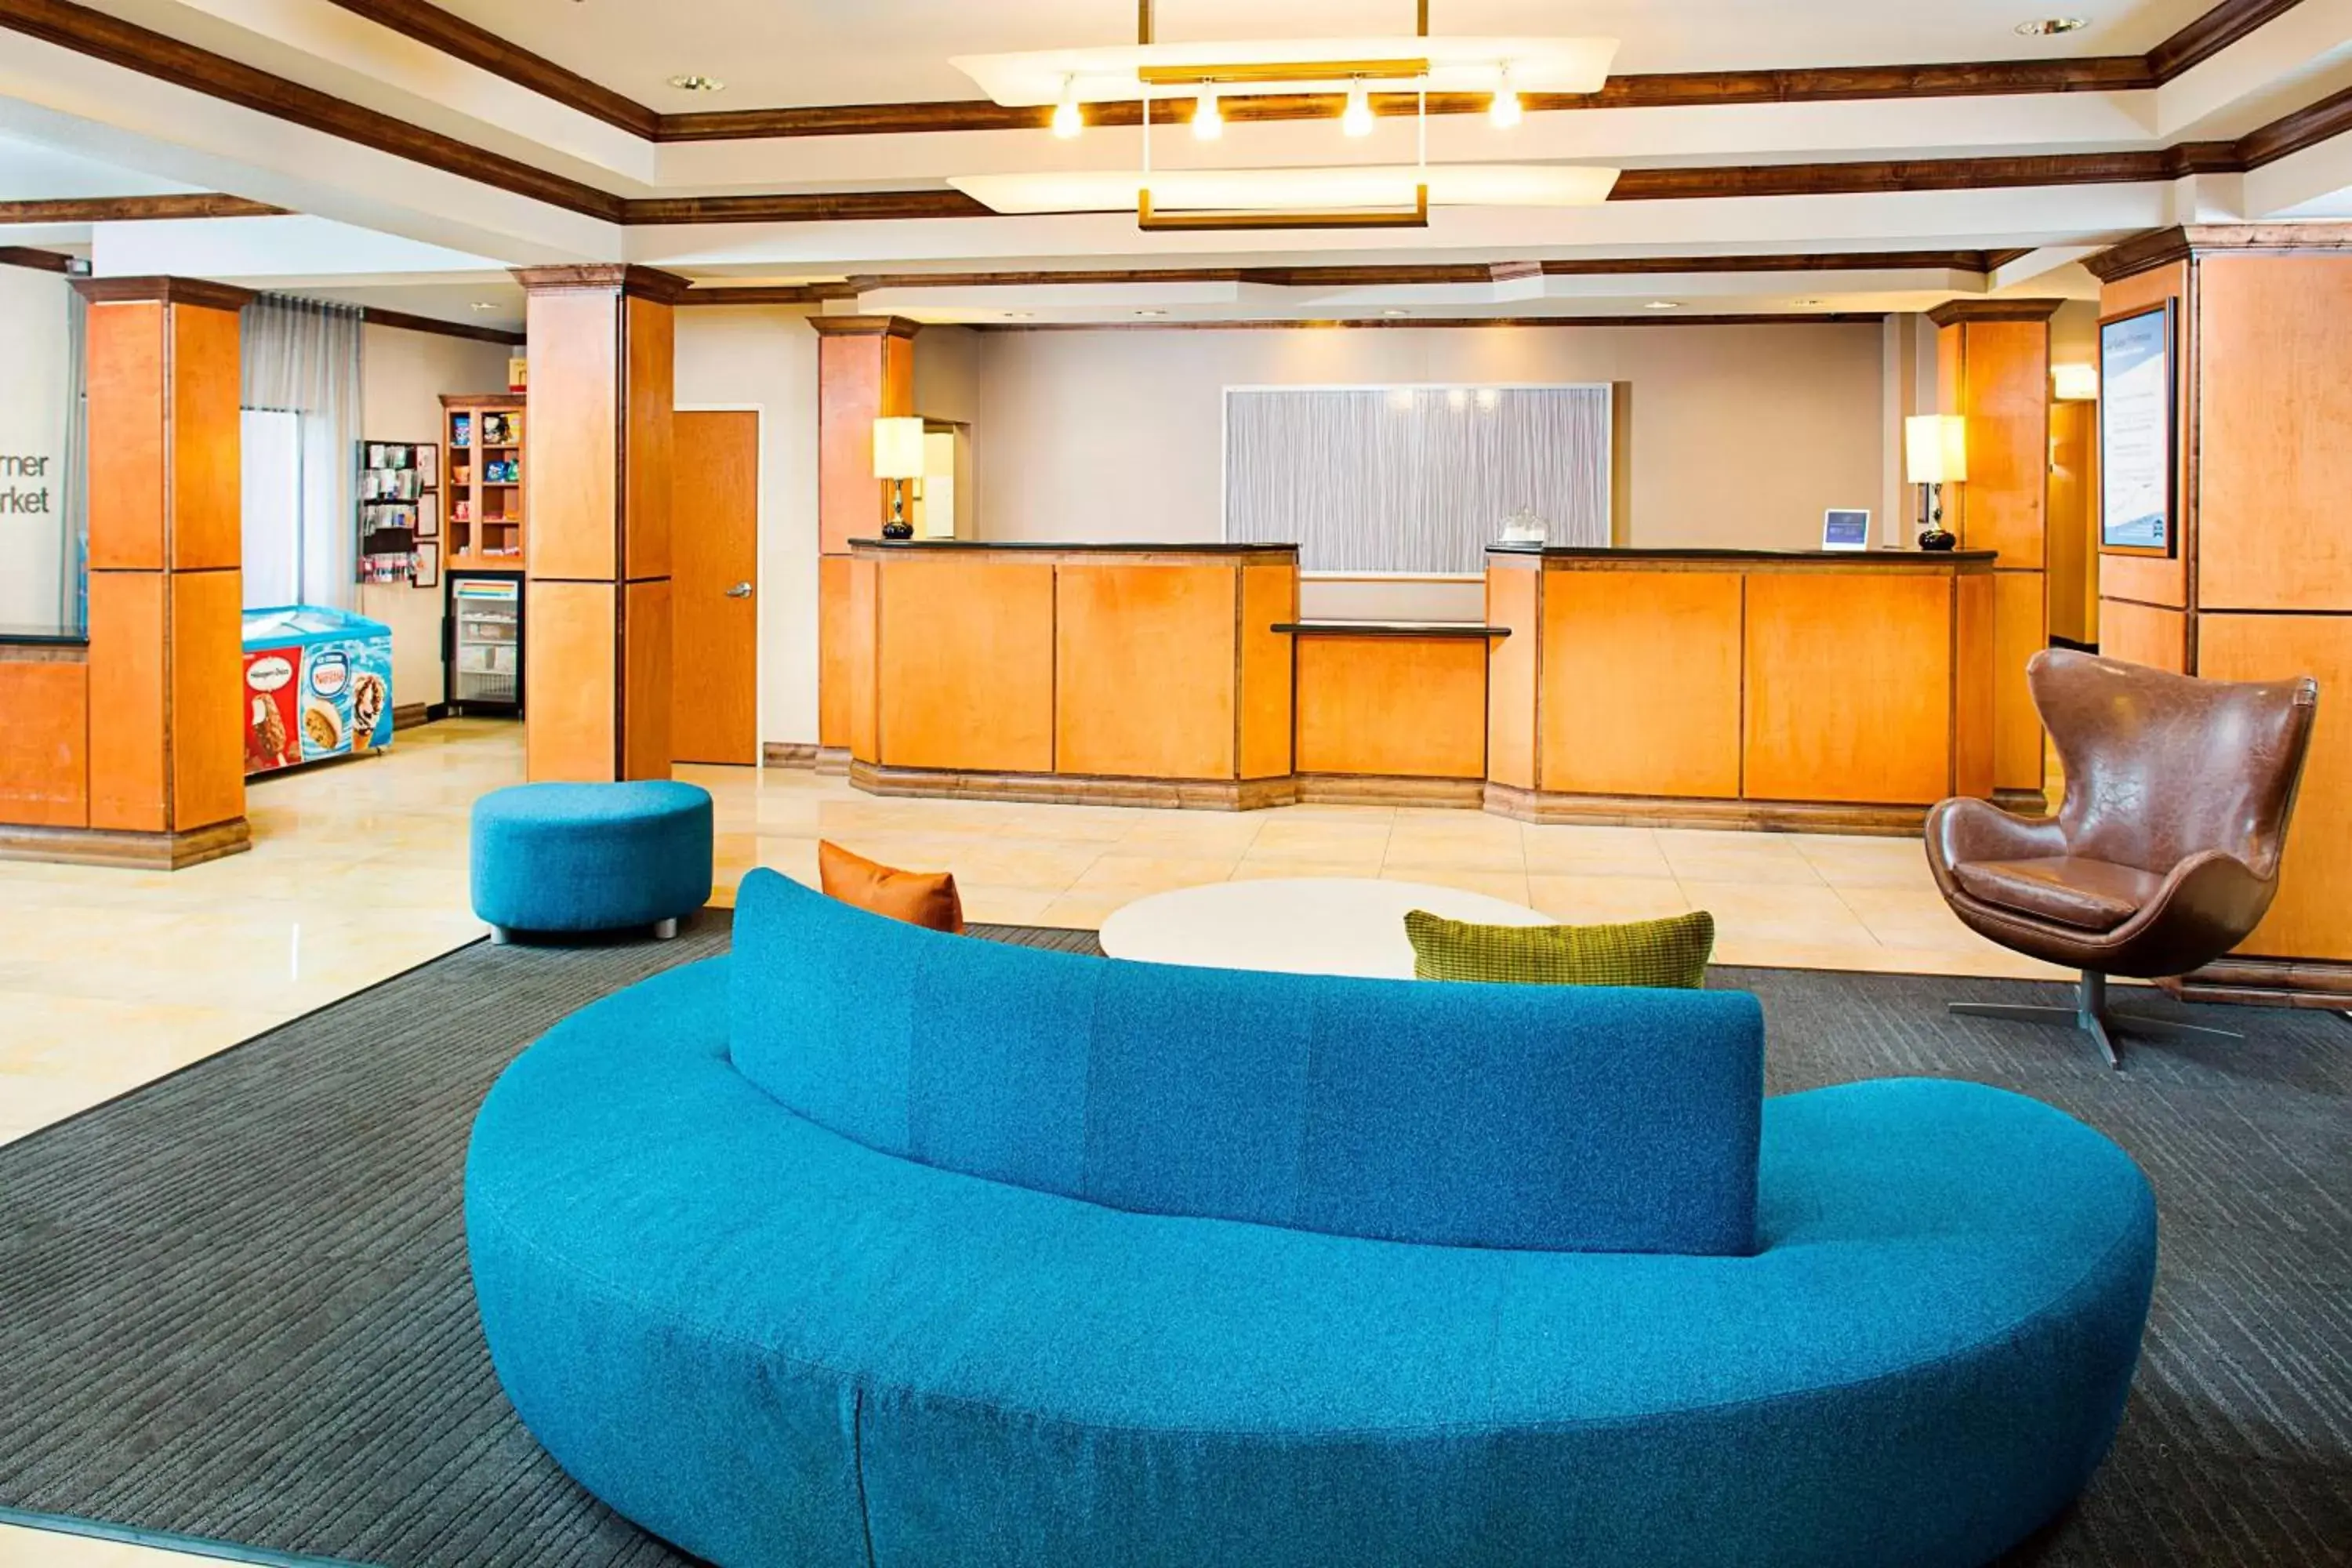 Lobby or reception in Fairfield Inn & Suites by Marriott San Antonio SeaWorld / Westover Hills